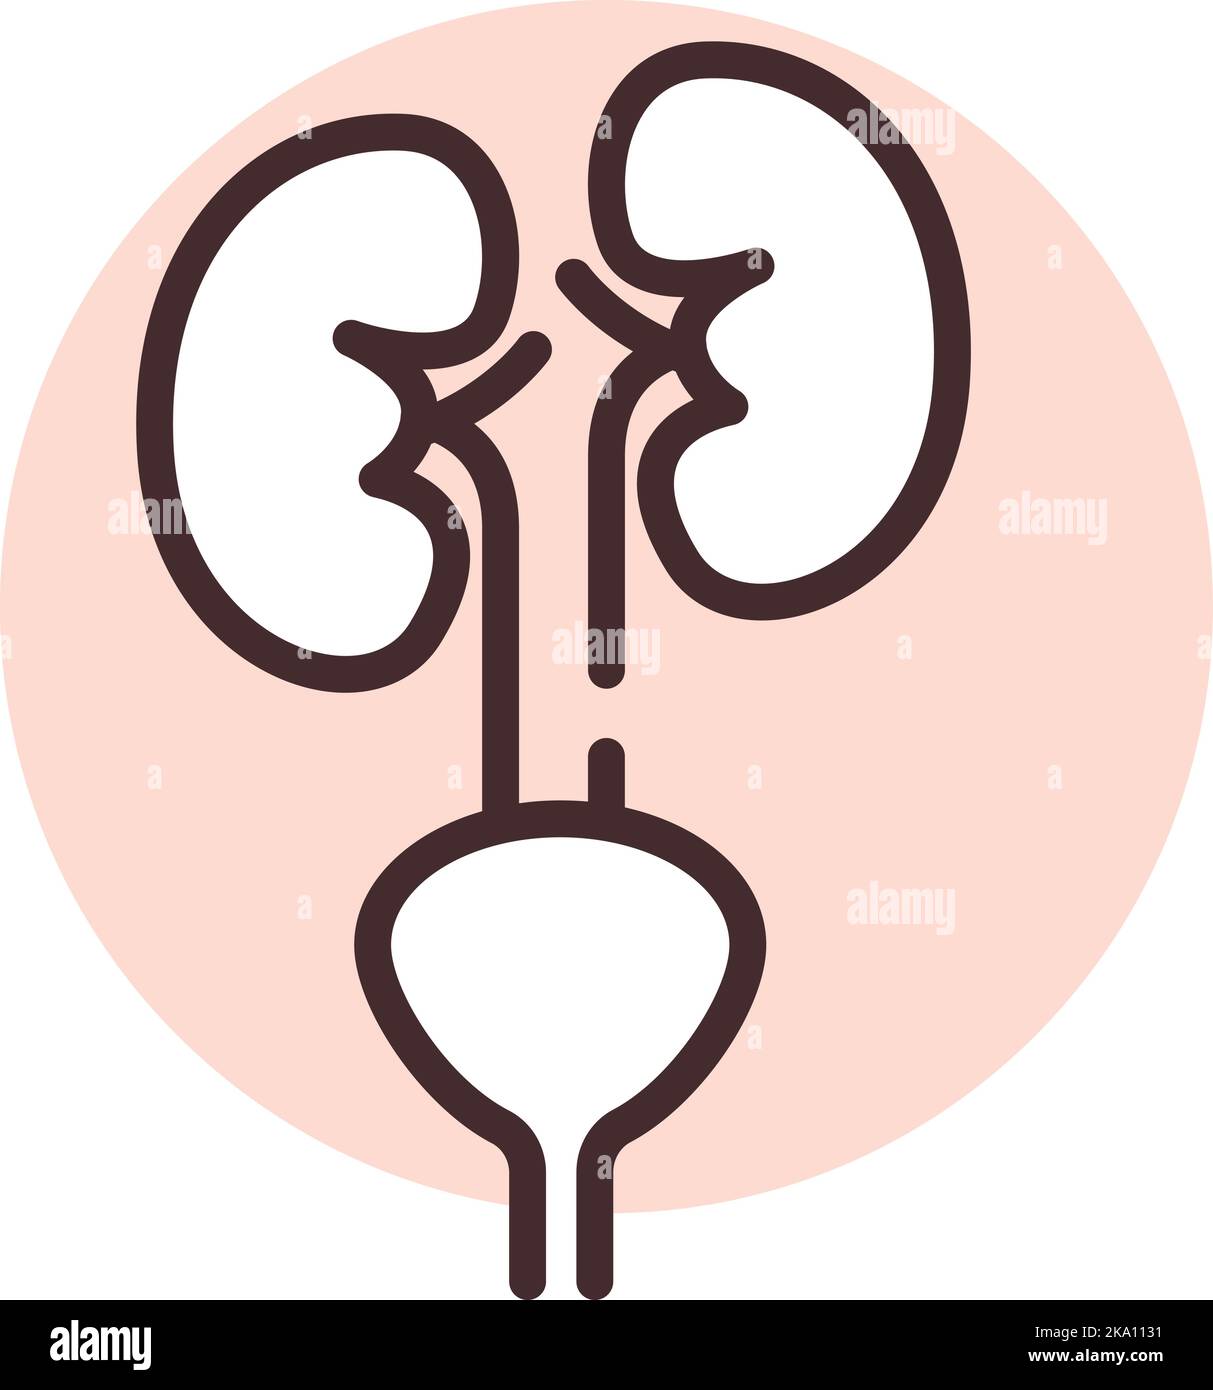 Human organ kidneys, illustration or icon, vector on white background. Stock Vector